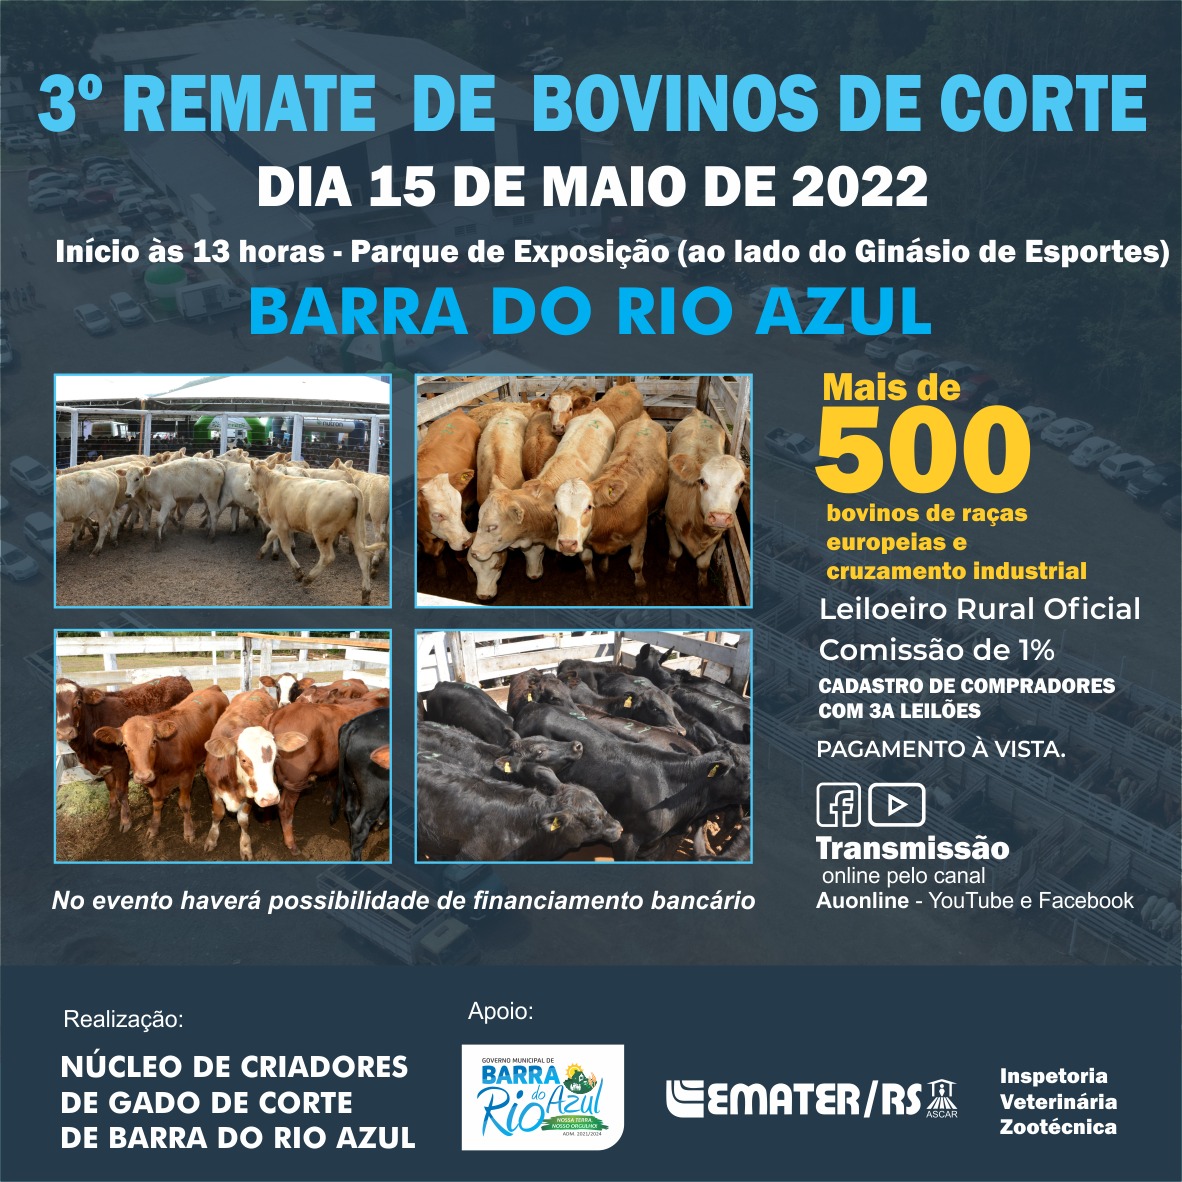 Barra do Rio Azul vai realizar remate de bovinos de corte no dia 15 de maio